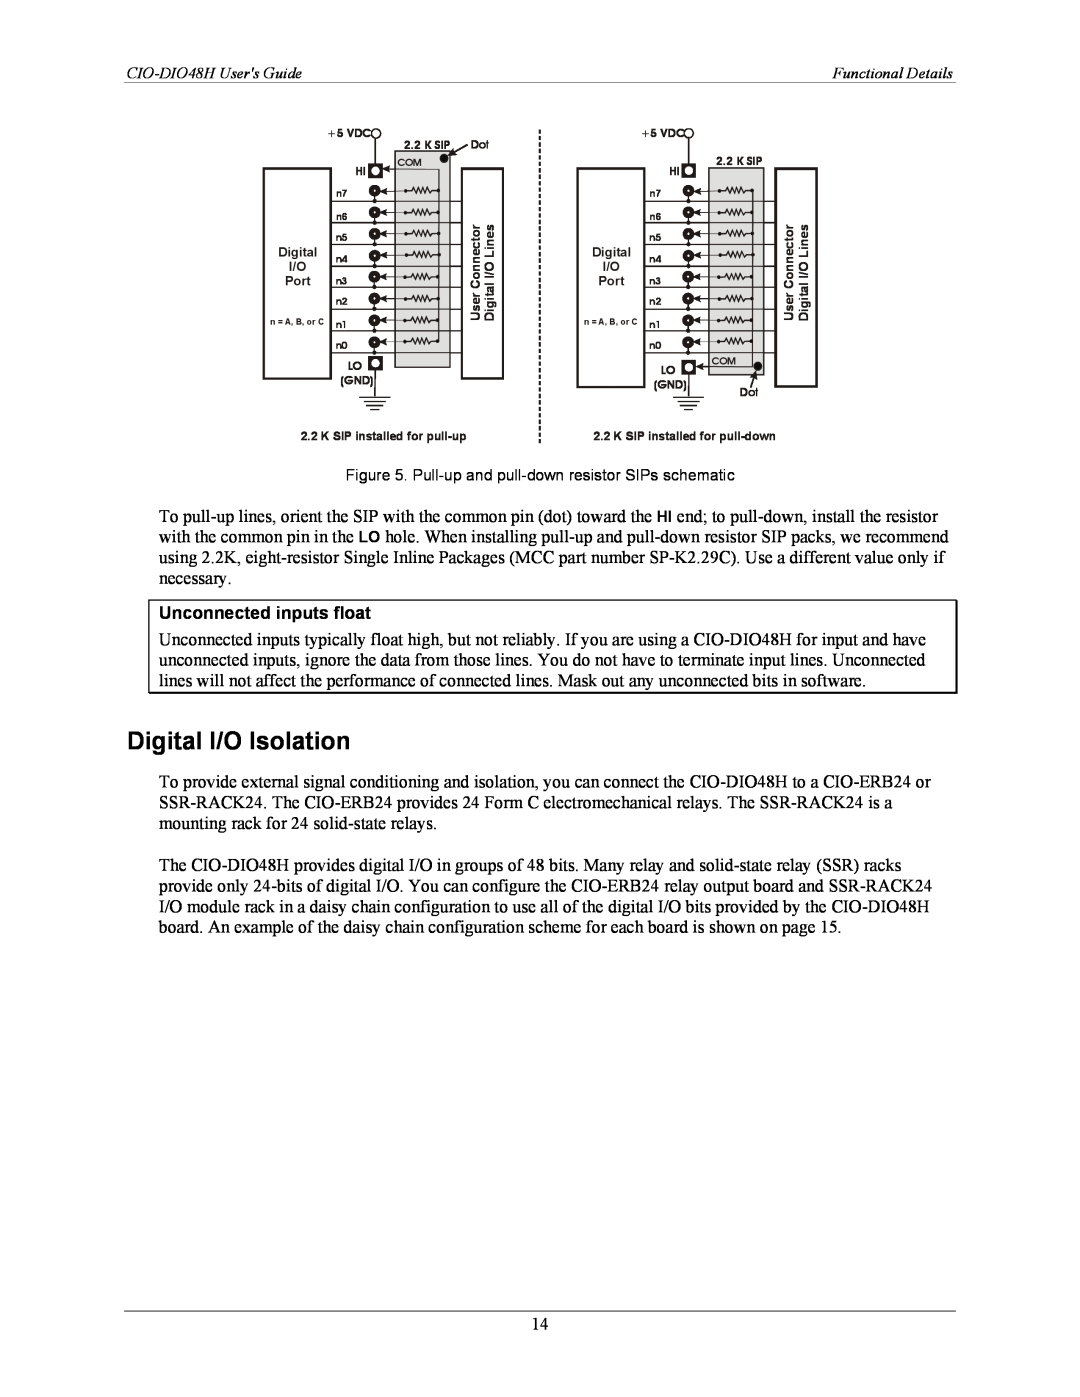 IBM CIO-DIO48H manual Digital I/O Isolation, Unconnected inputs float 